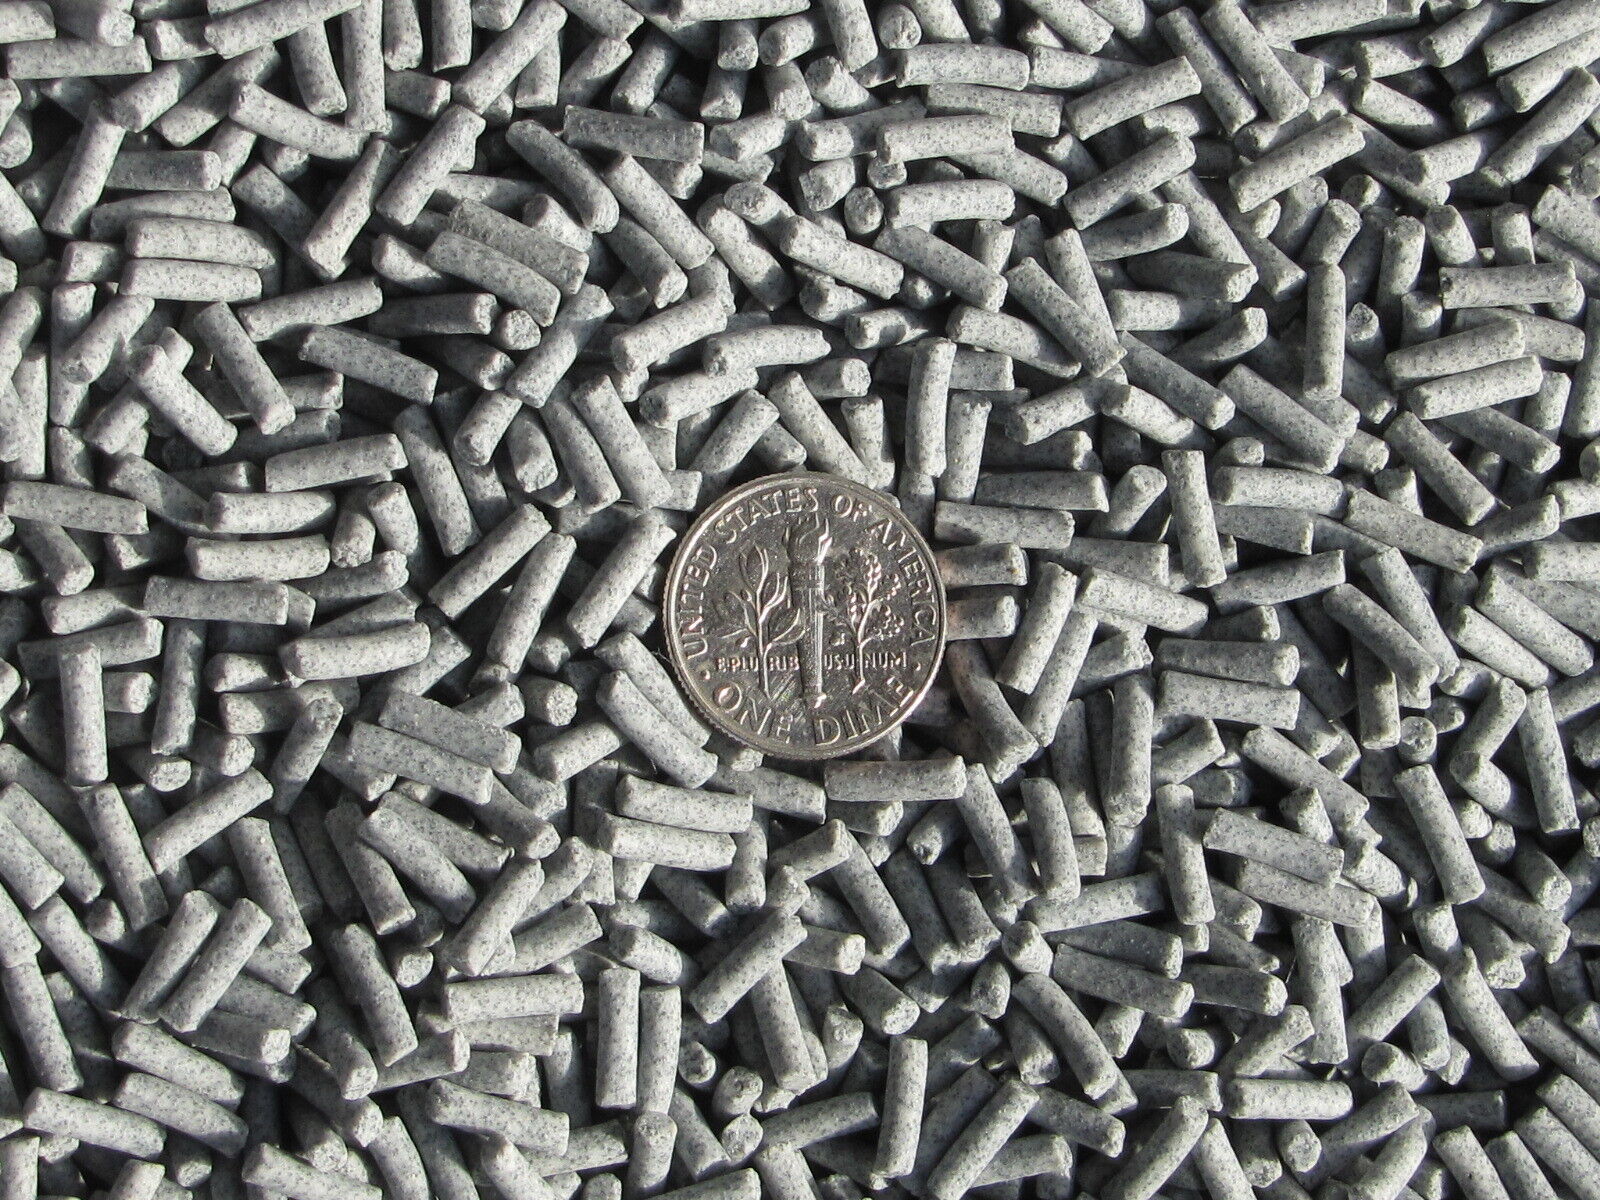 10 Lb. 2.5 X 8 mm pin Abrasive Fast Cutting Ceramic Tumbling Tumbler Media